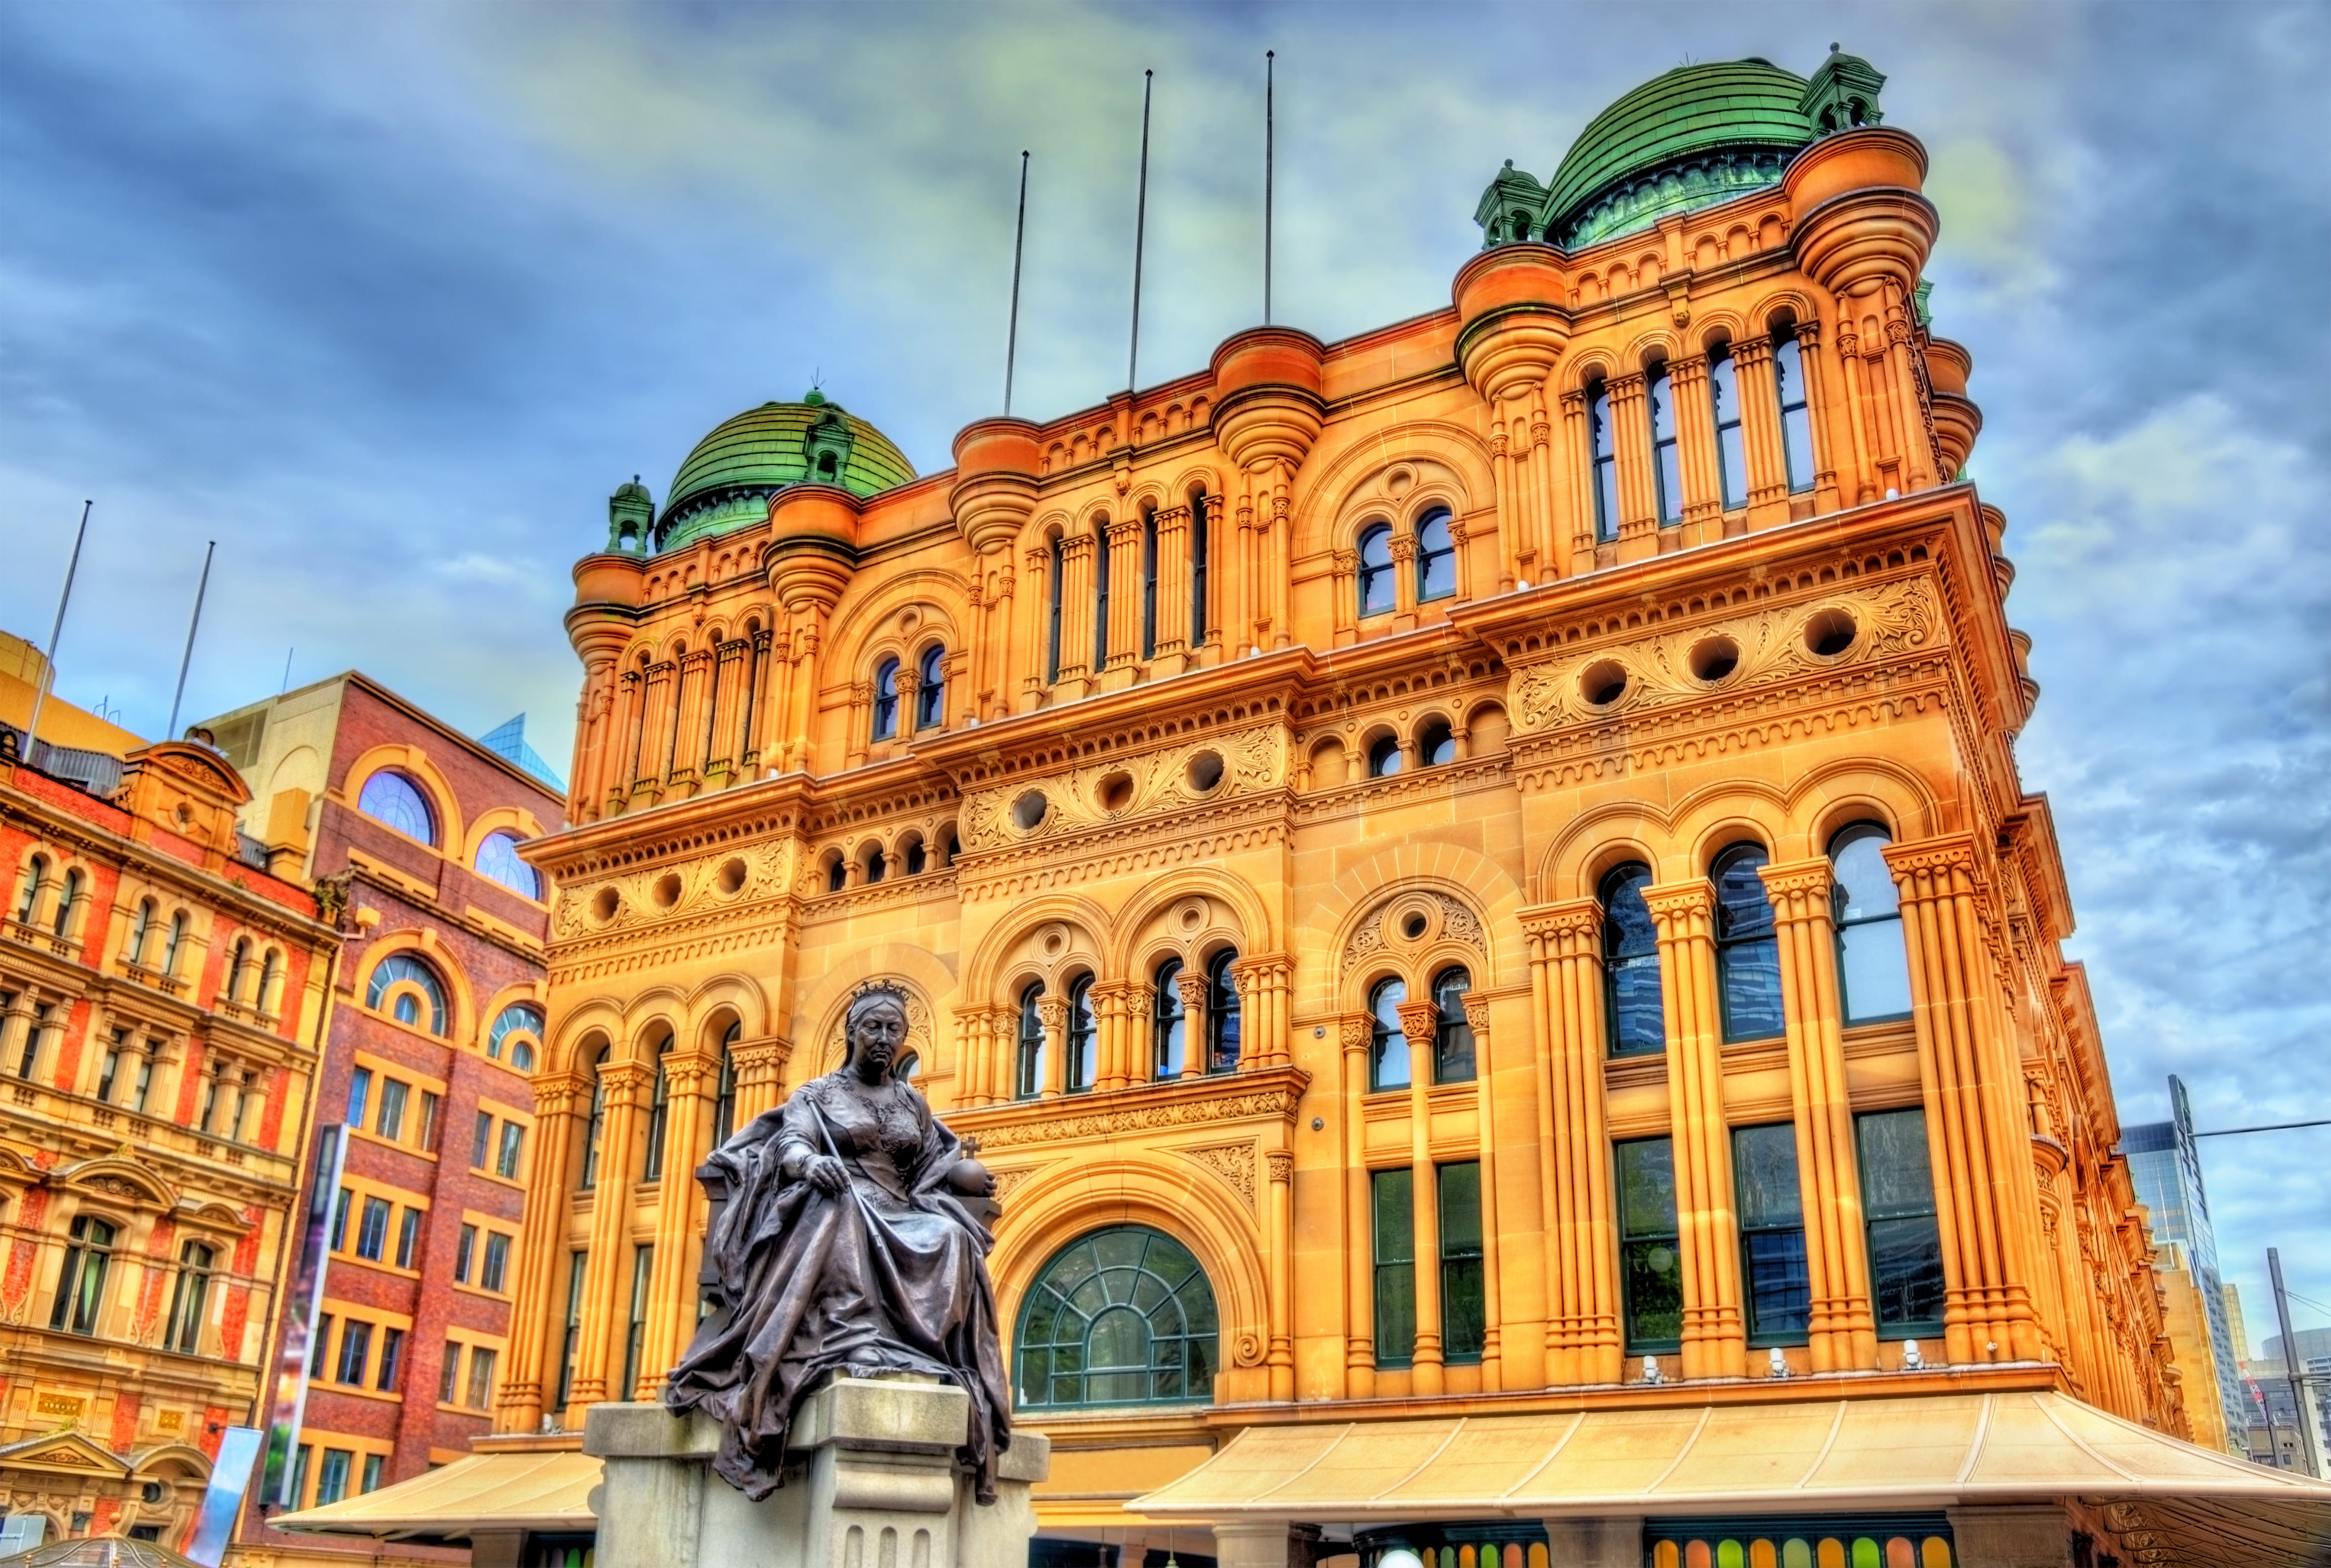 Admire the Queen Victoria Building